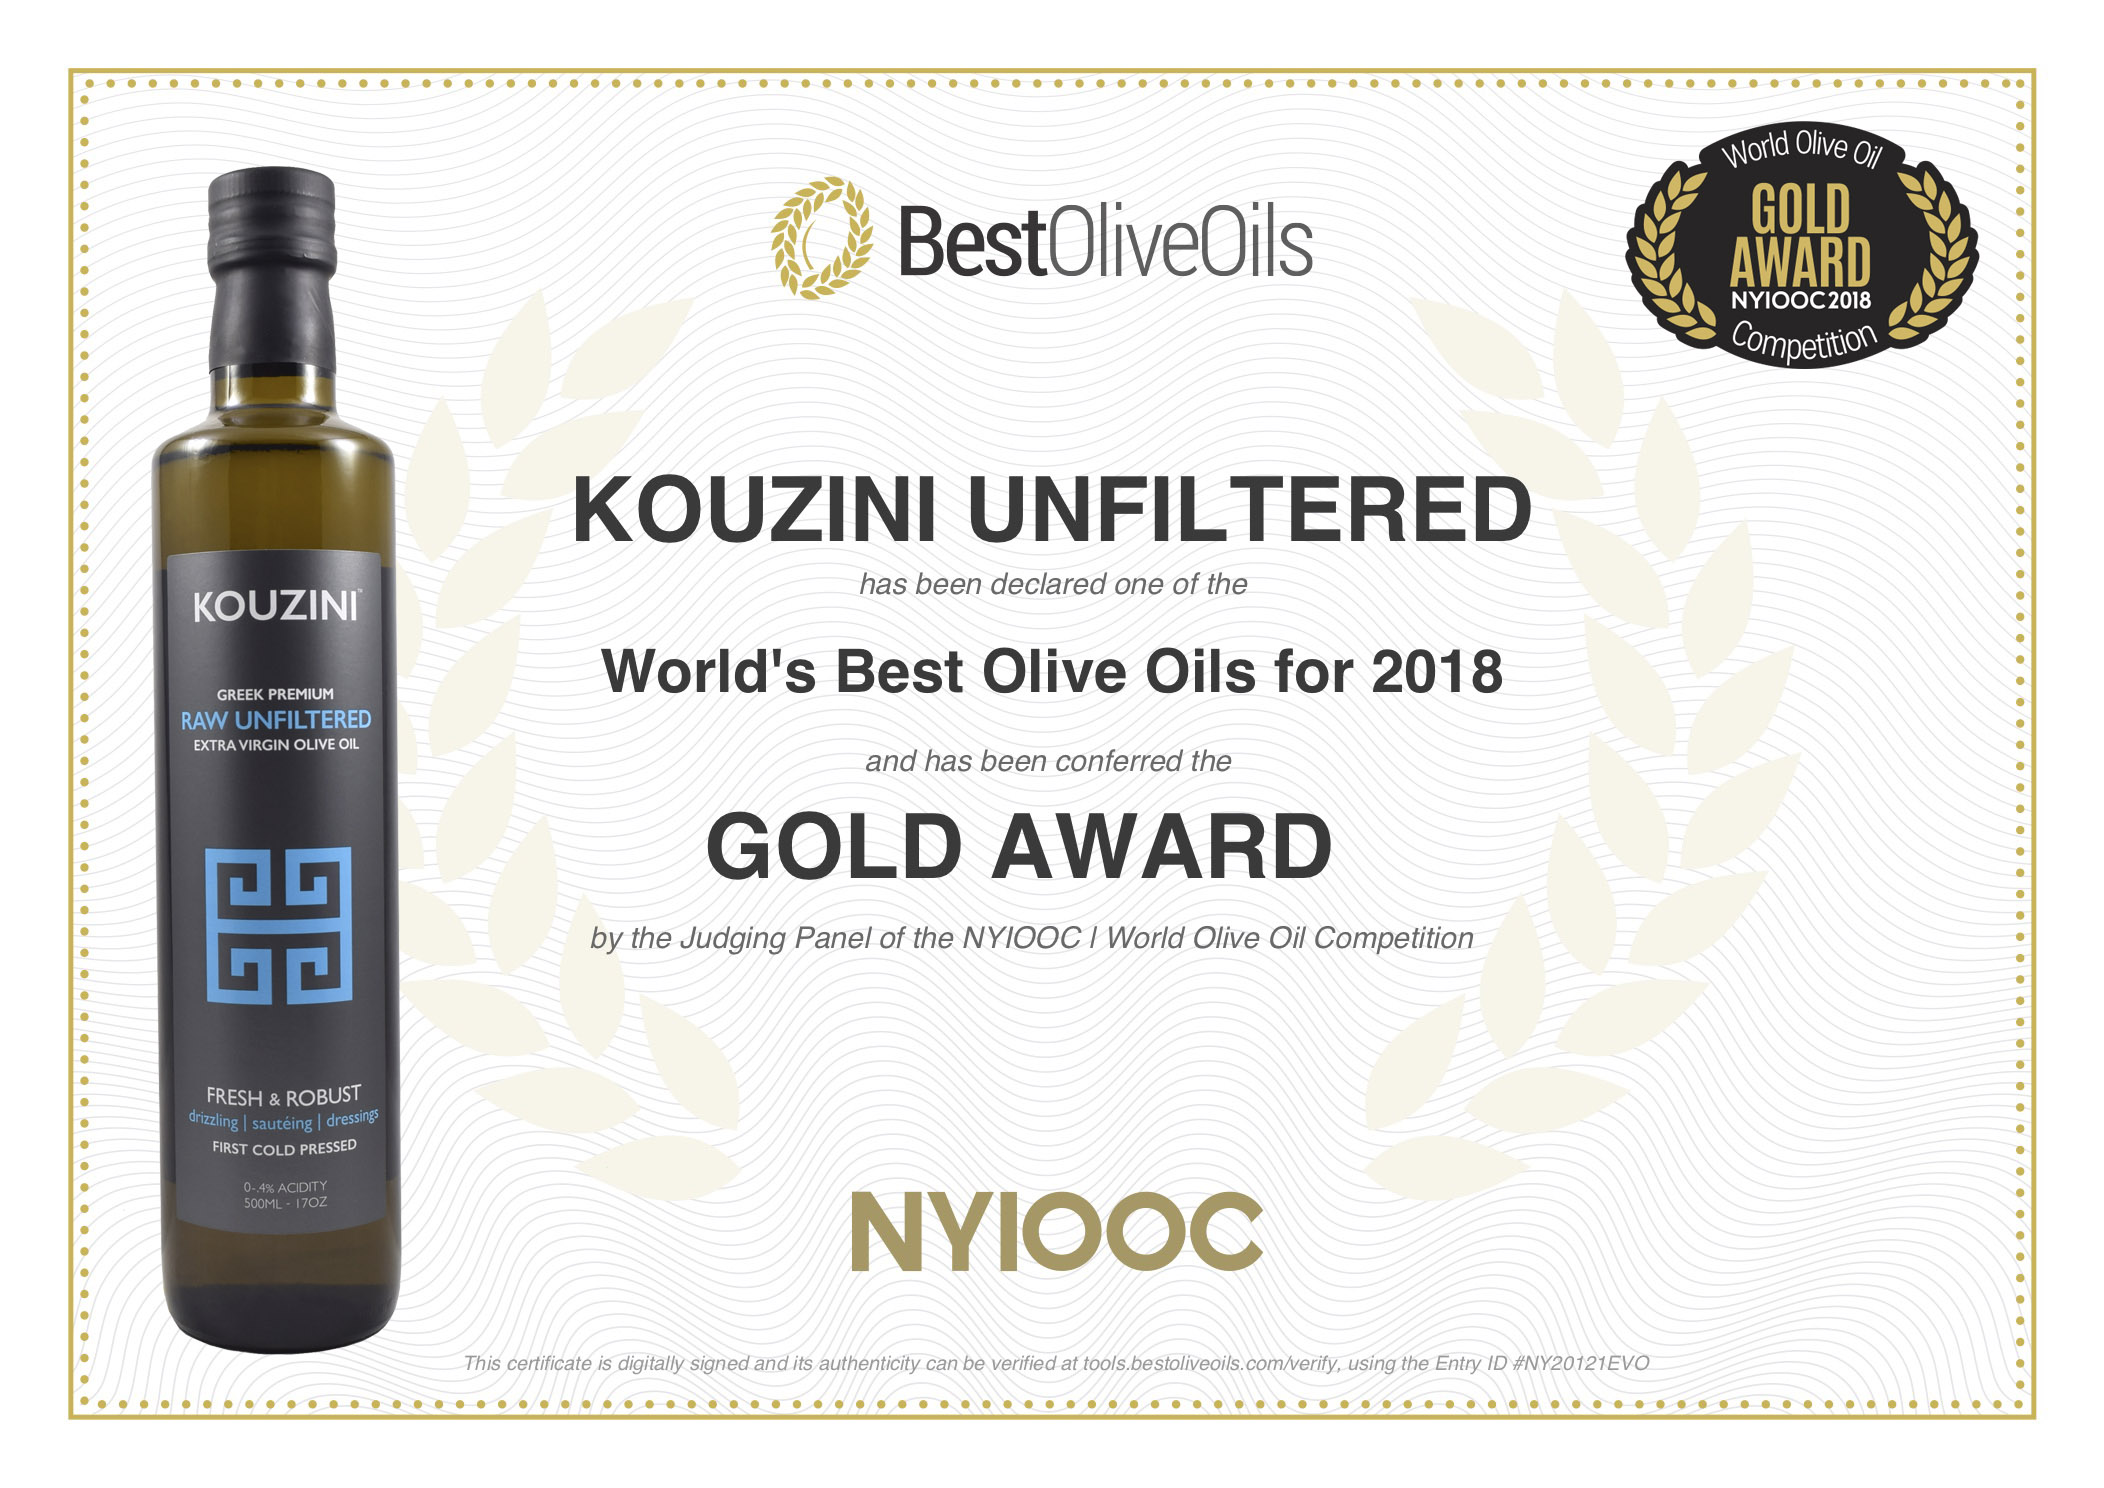 Kouzini 2018 Gold Award 2.jpg